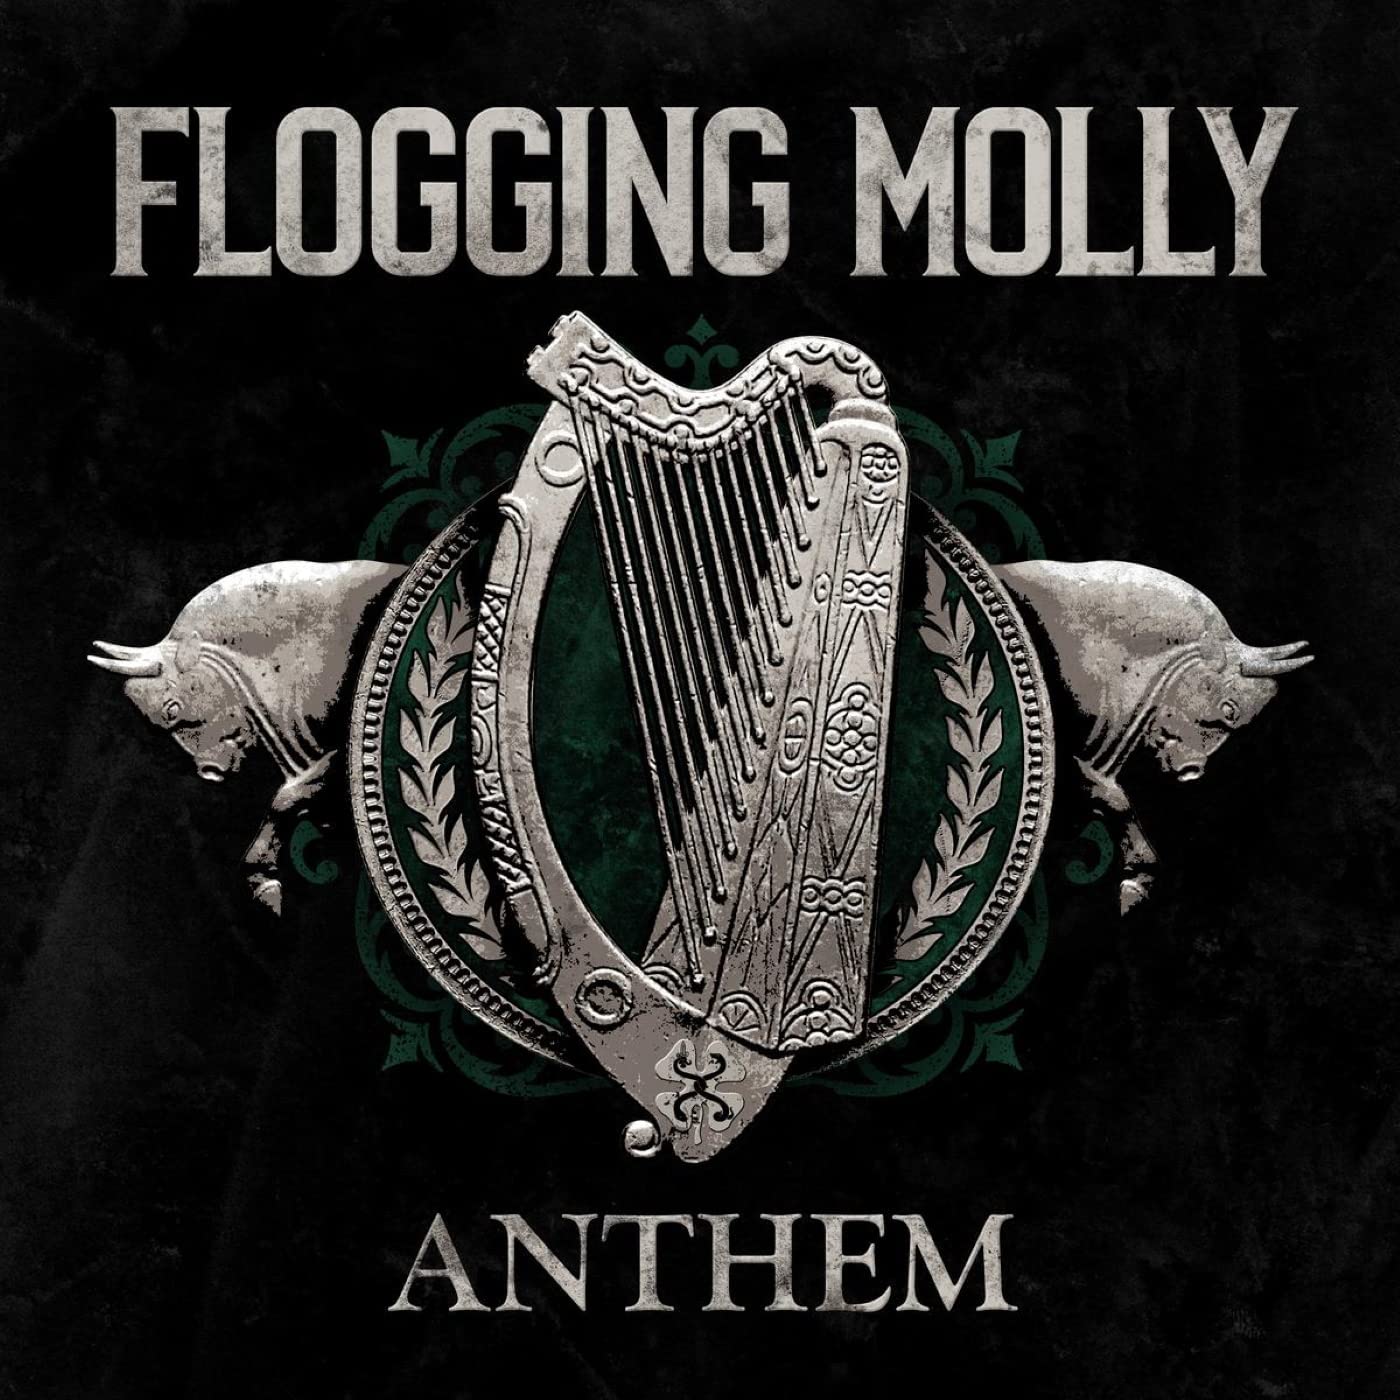 Flogging Molly - Anthem - CD